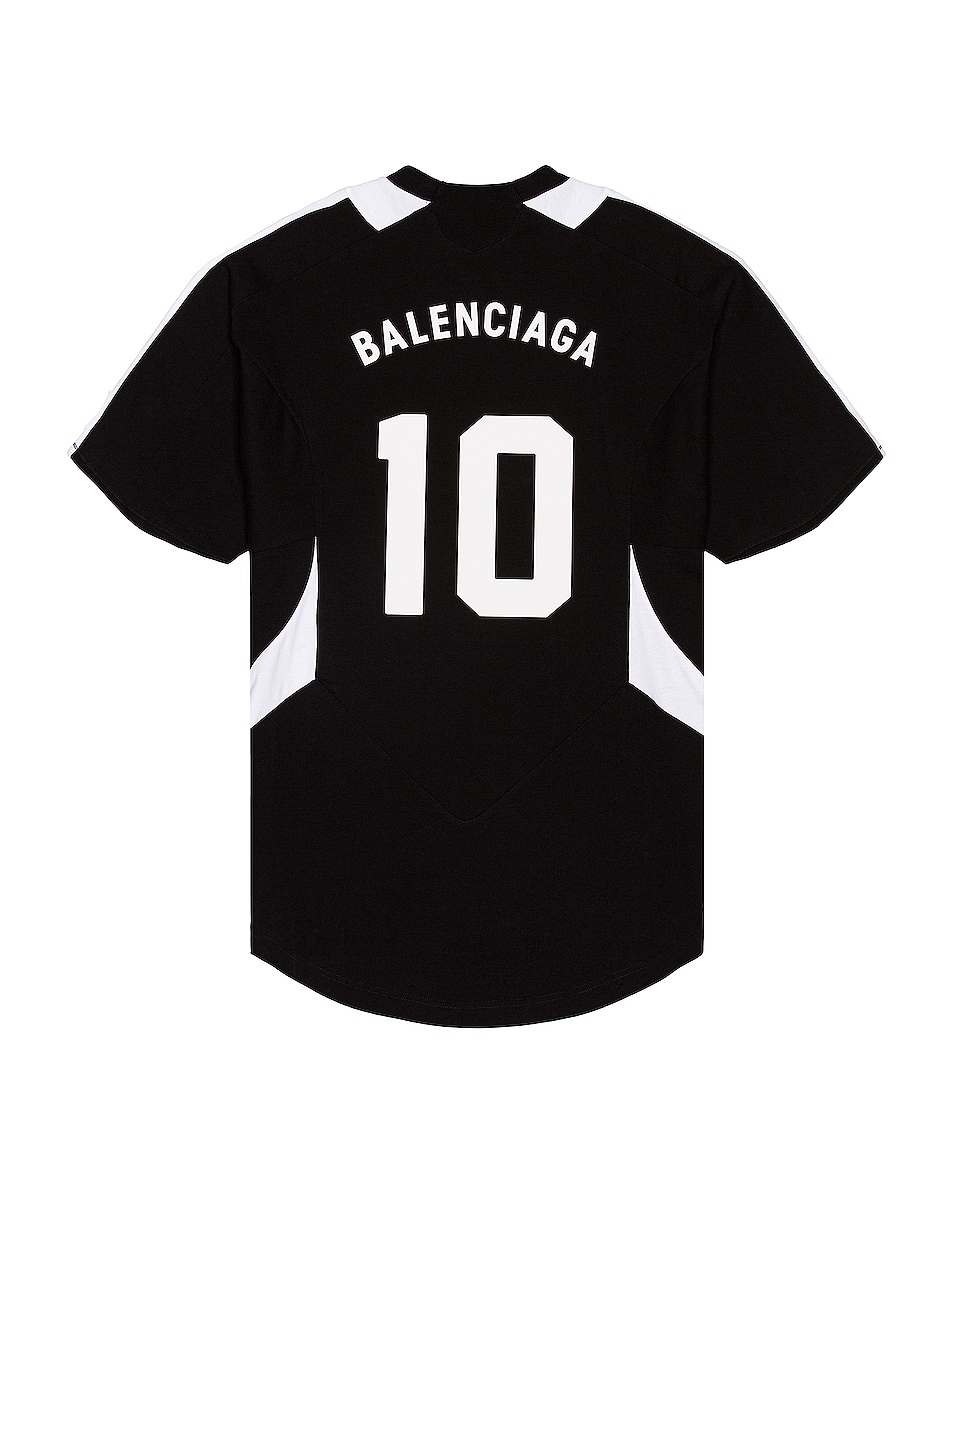 Balenciaga Short Sleeve Soccer T-Shirt in Black & White | FWRD